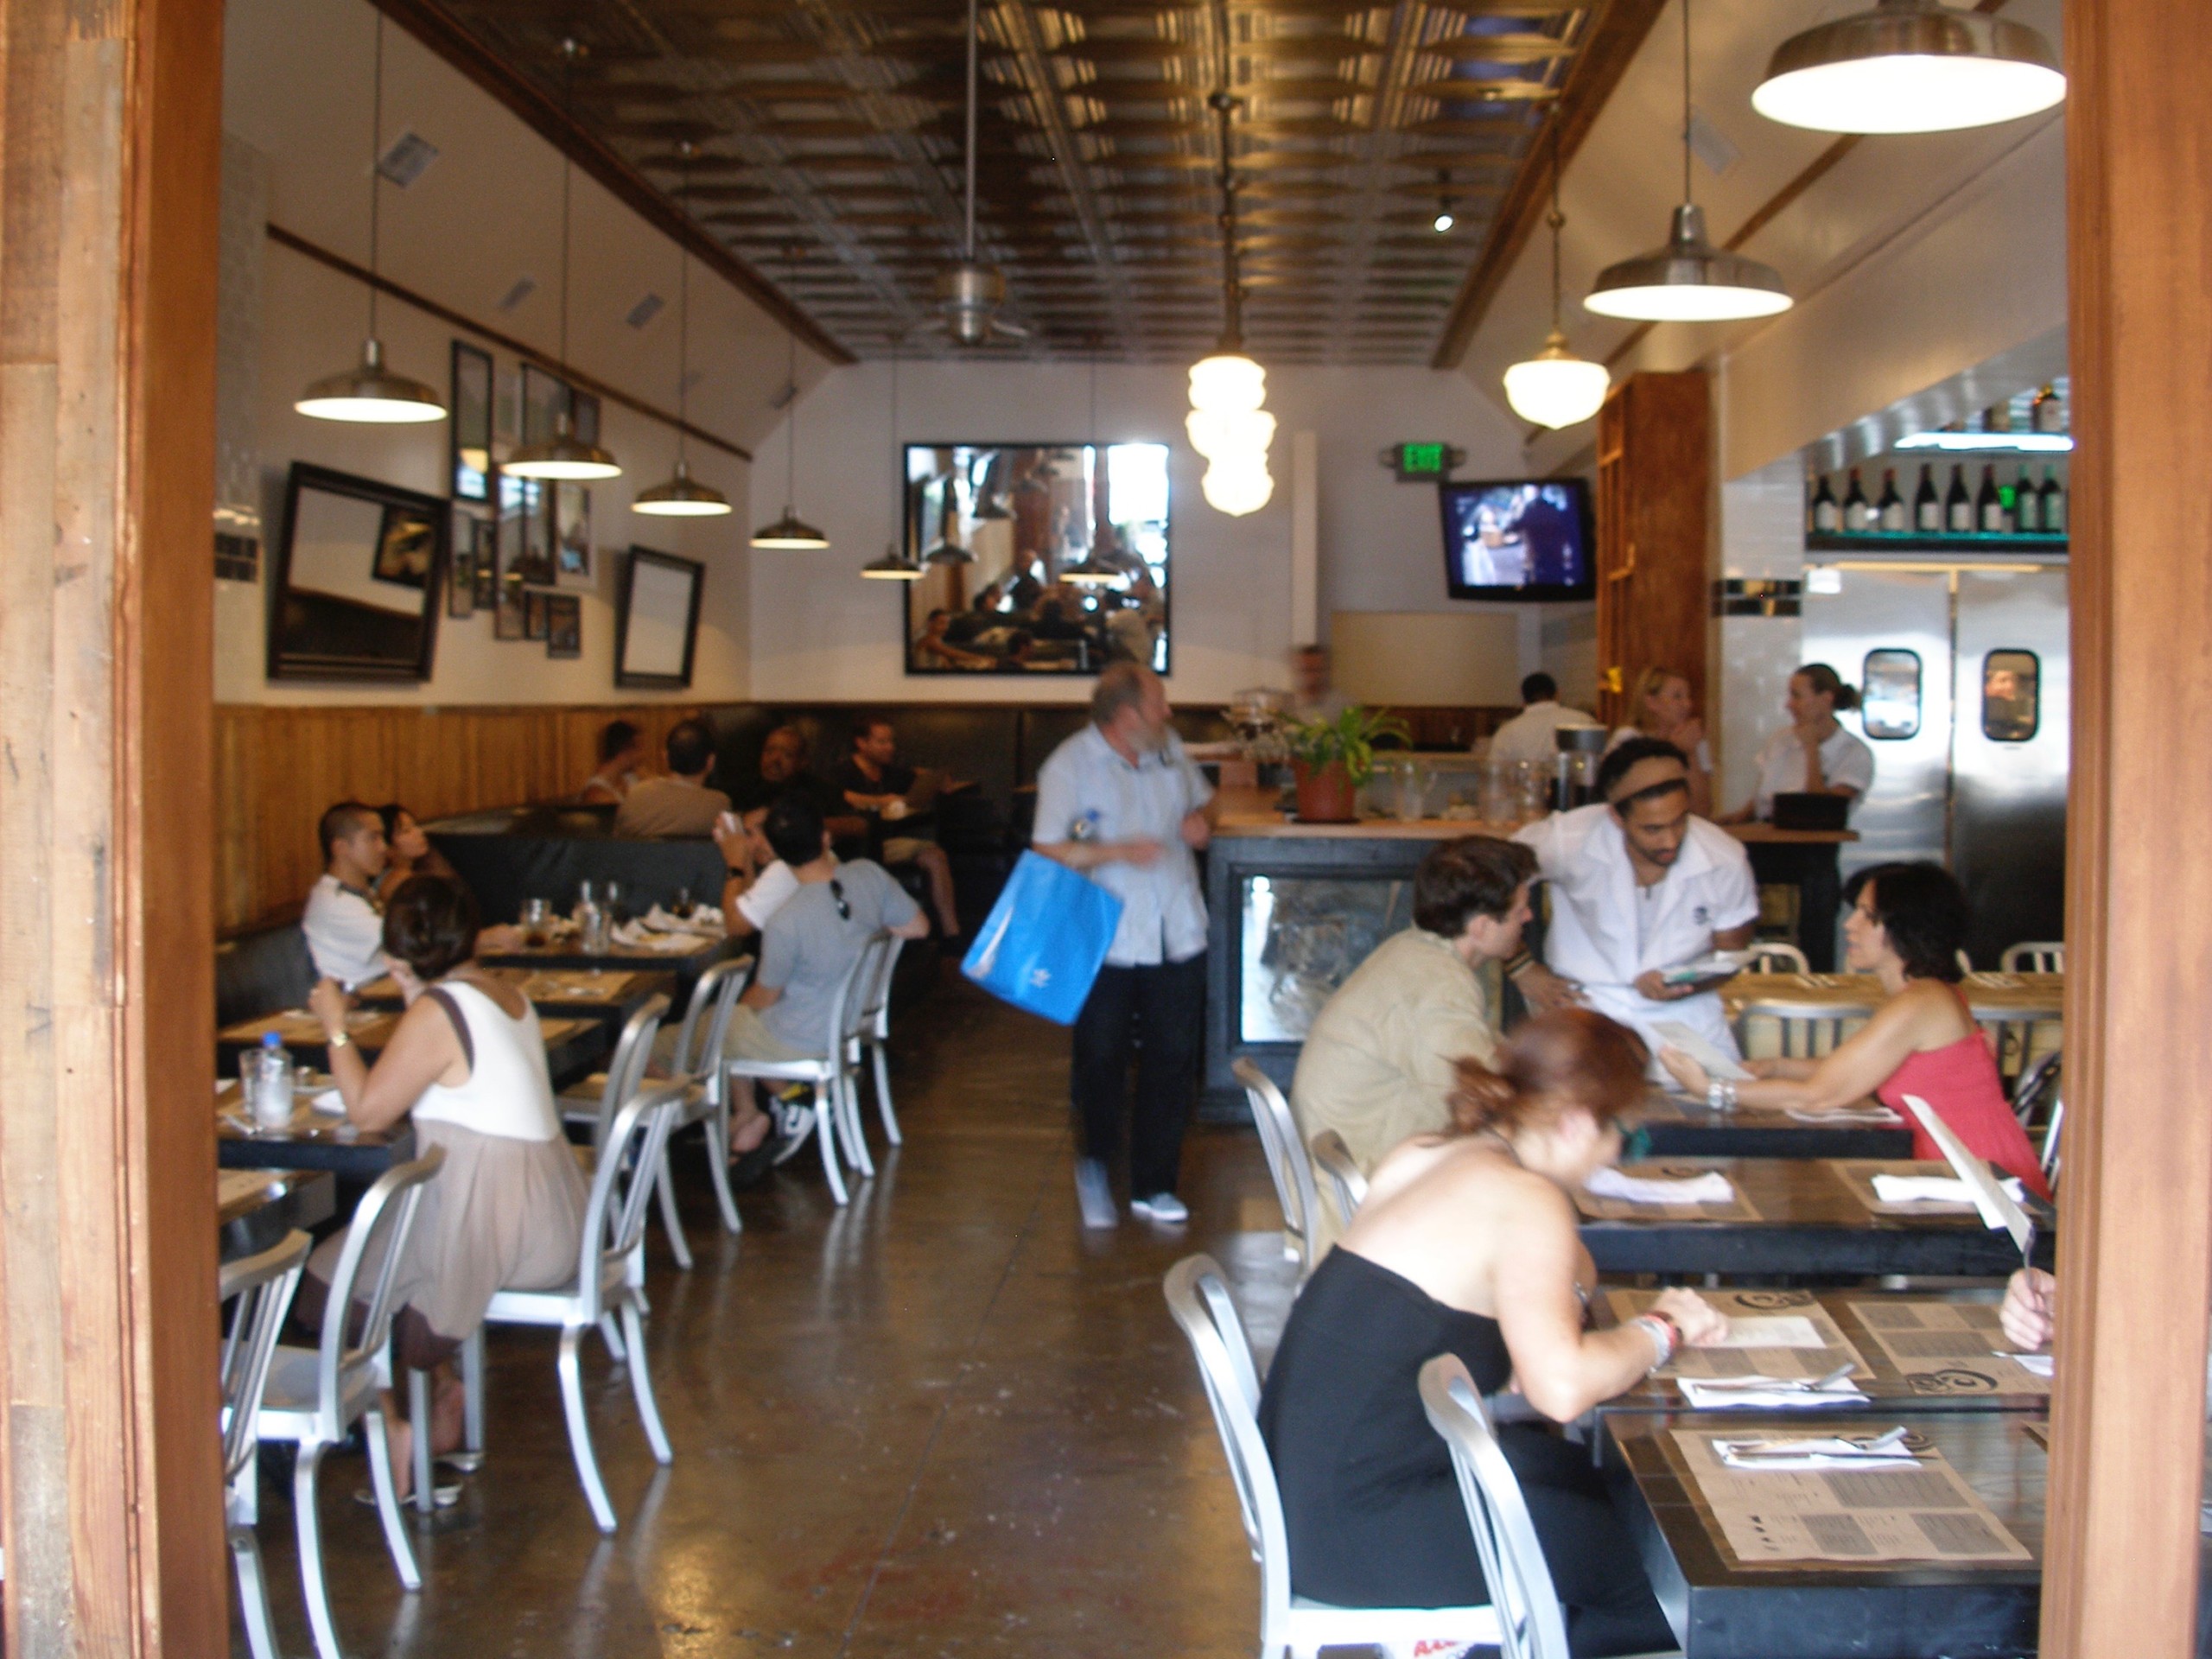 Restaurant Los Angeles